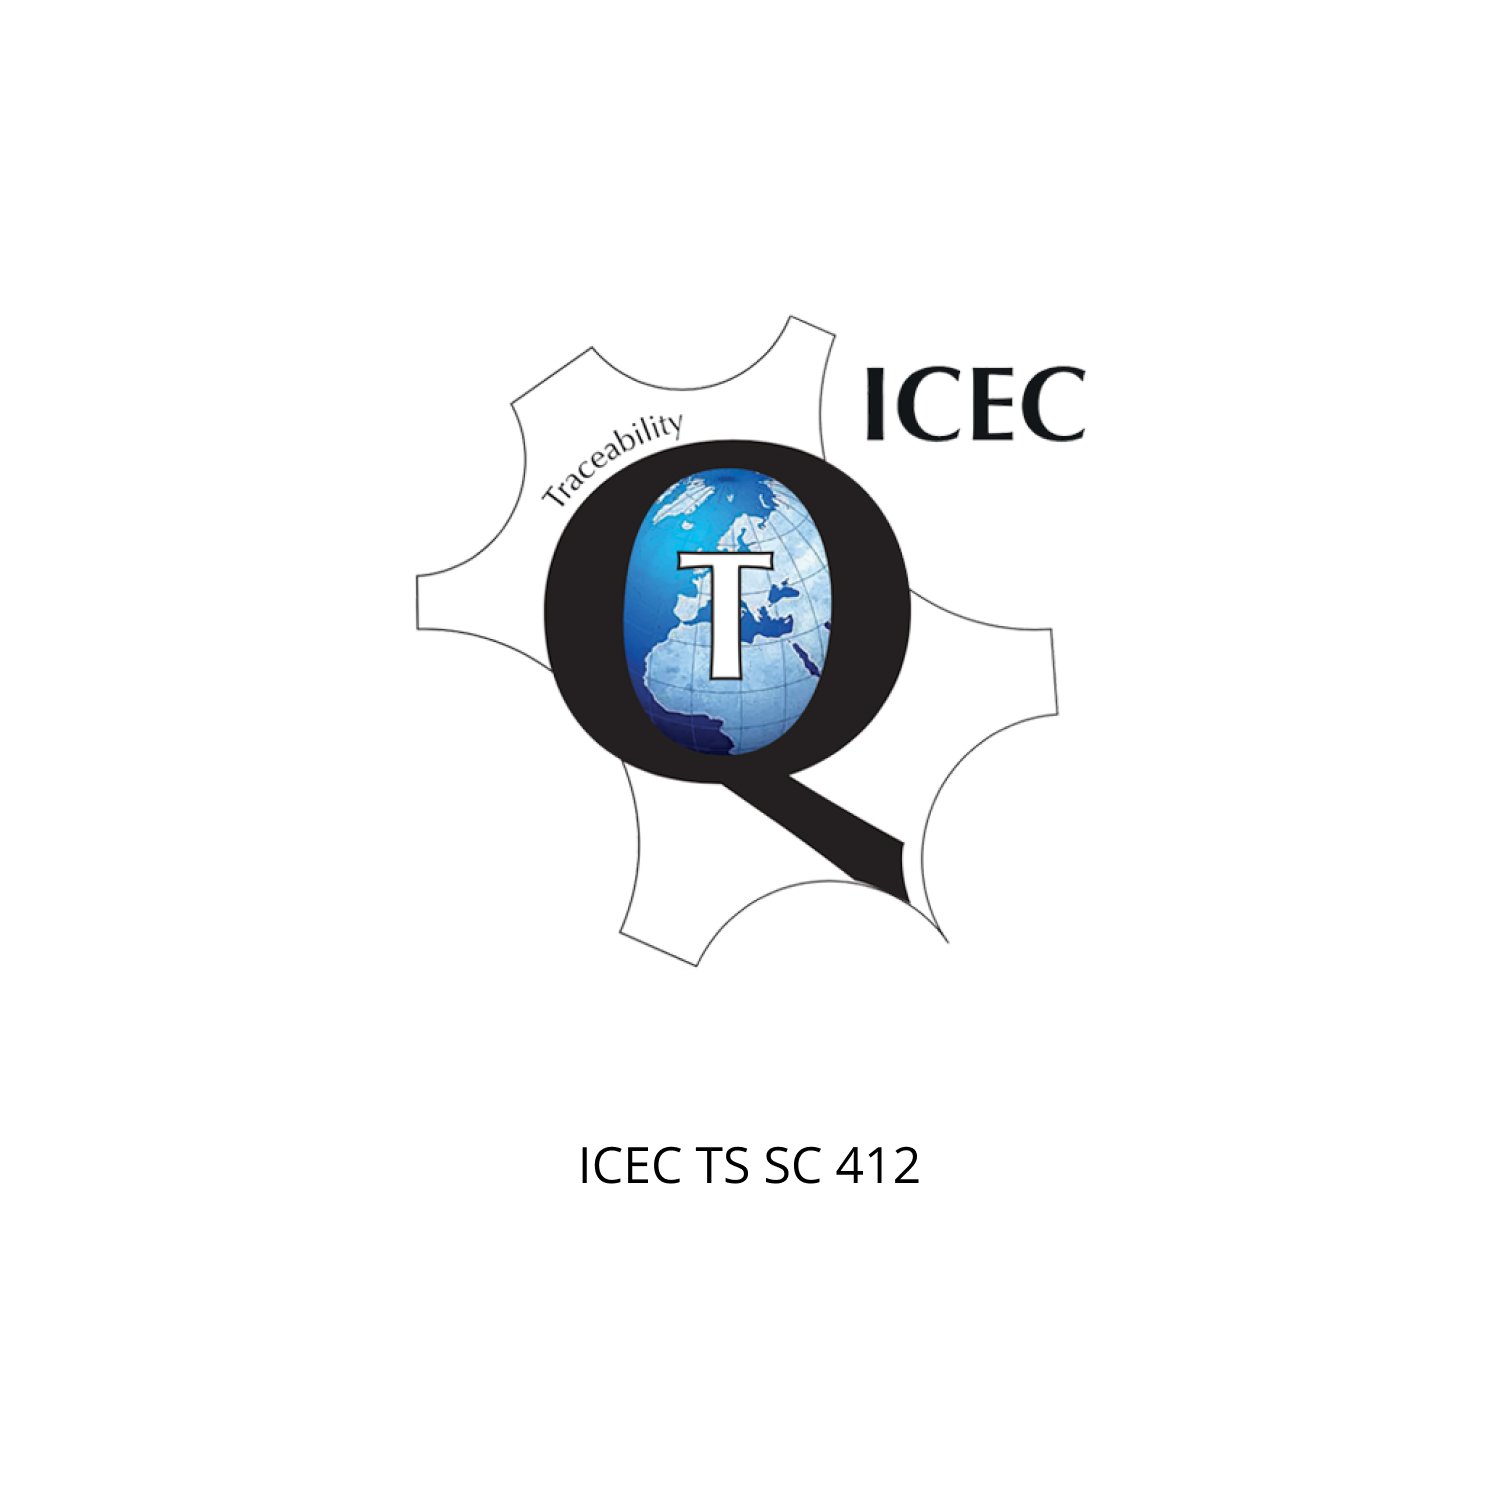 ICEC TSCS 410.jpg (Copia) (Copia) (Copia) (Copia)